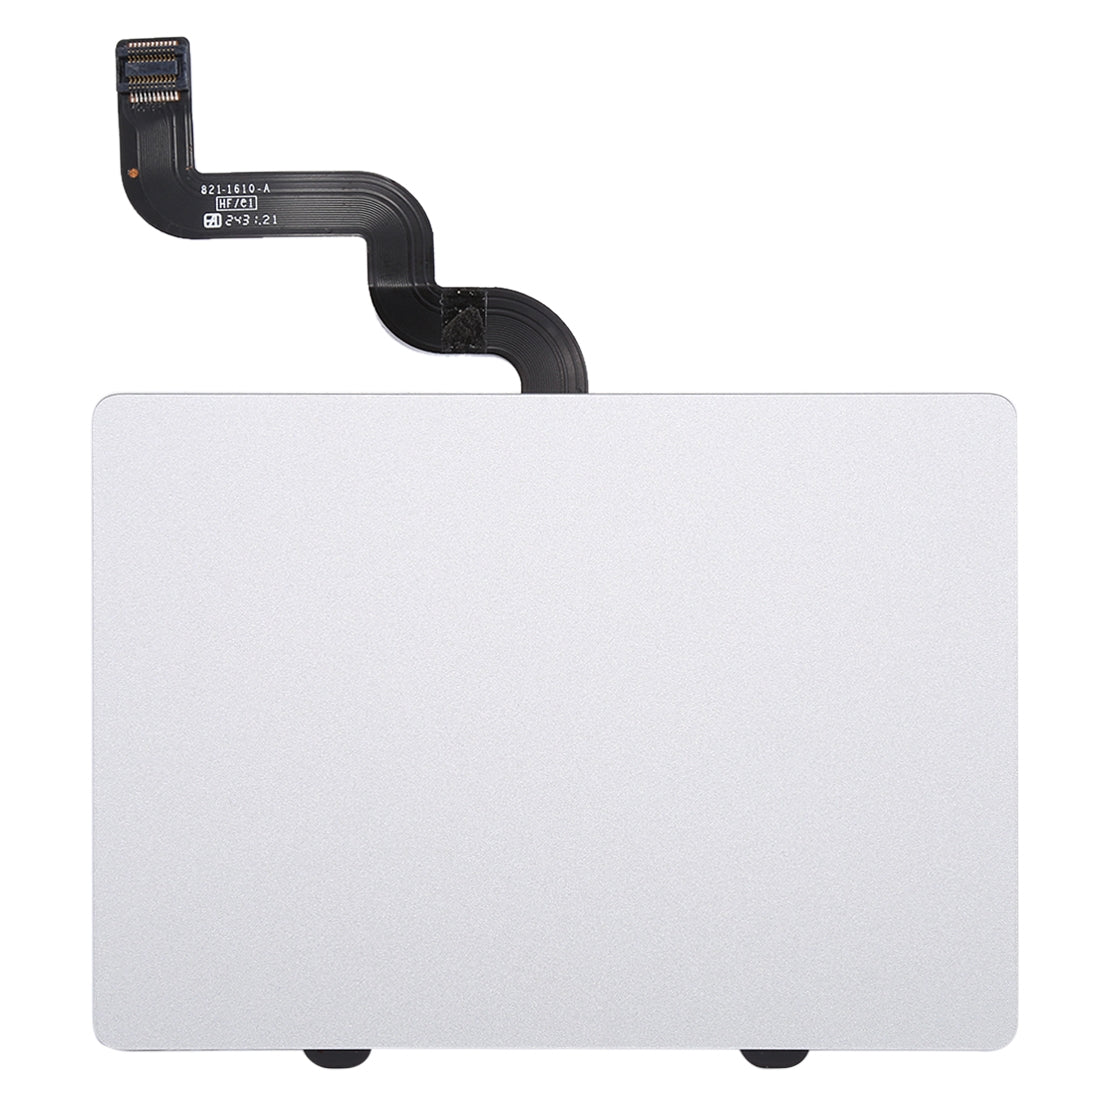 TouchPad Touchpad Apple MacBook Pro 13.3 2012 A1398 MC975 MC976